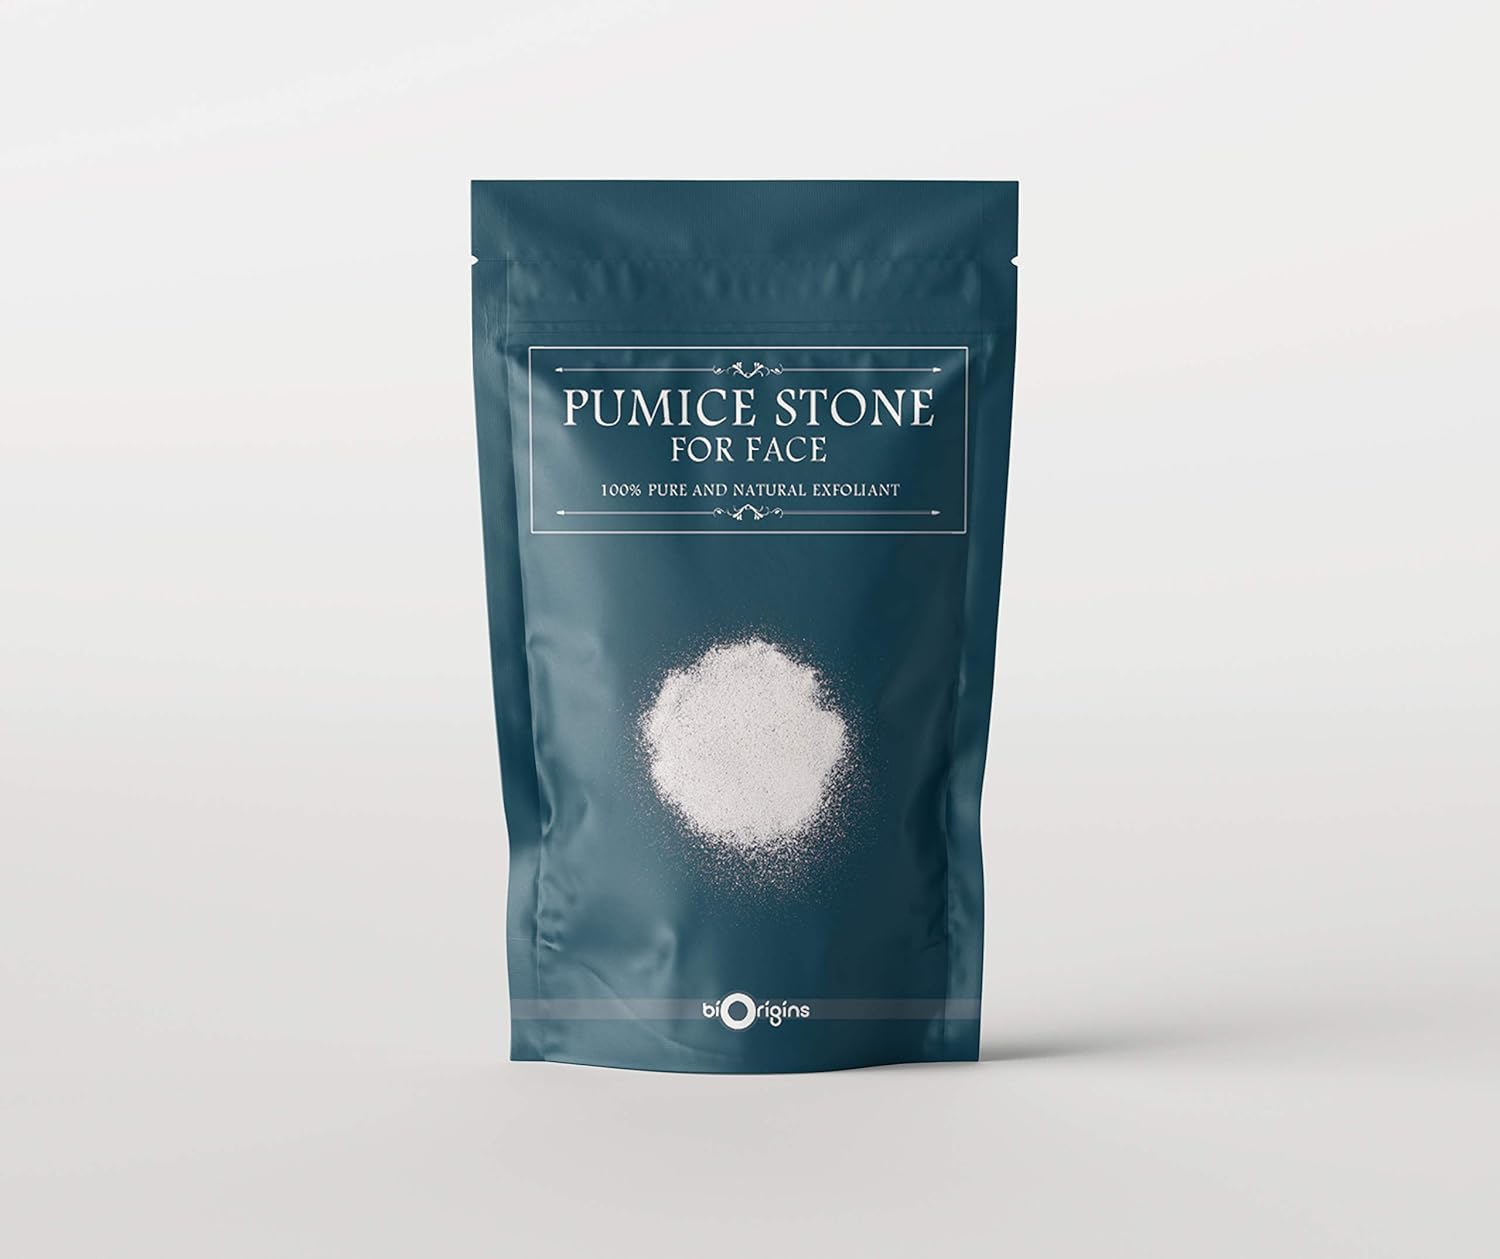 Mystic Moments | Pumice Stone Superfine For Face Natural Exfoliant 1Kg Pure & Natural Scrub Vegan GMO Free